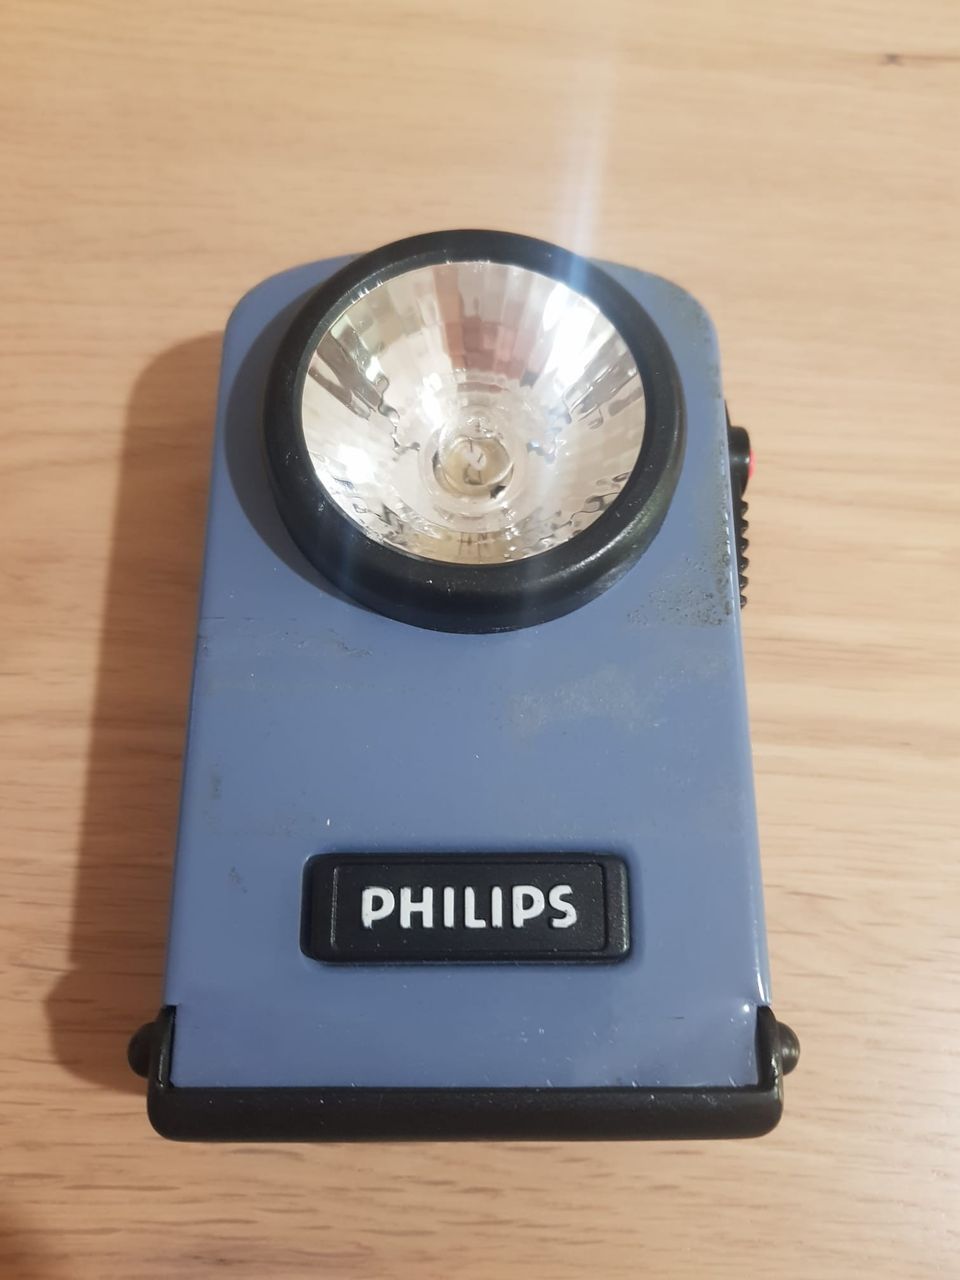 Retro taskulamppu Philips